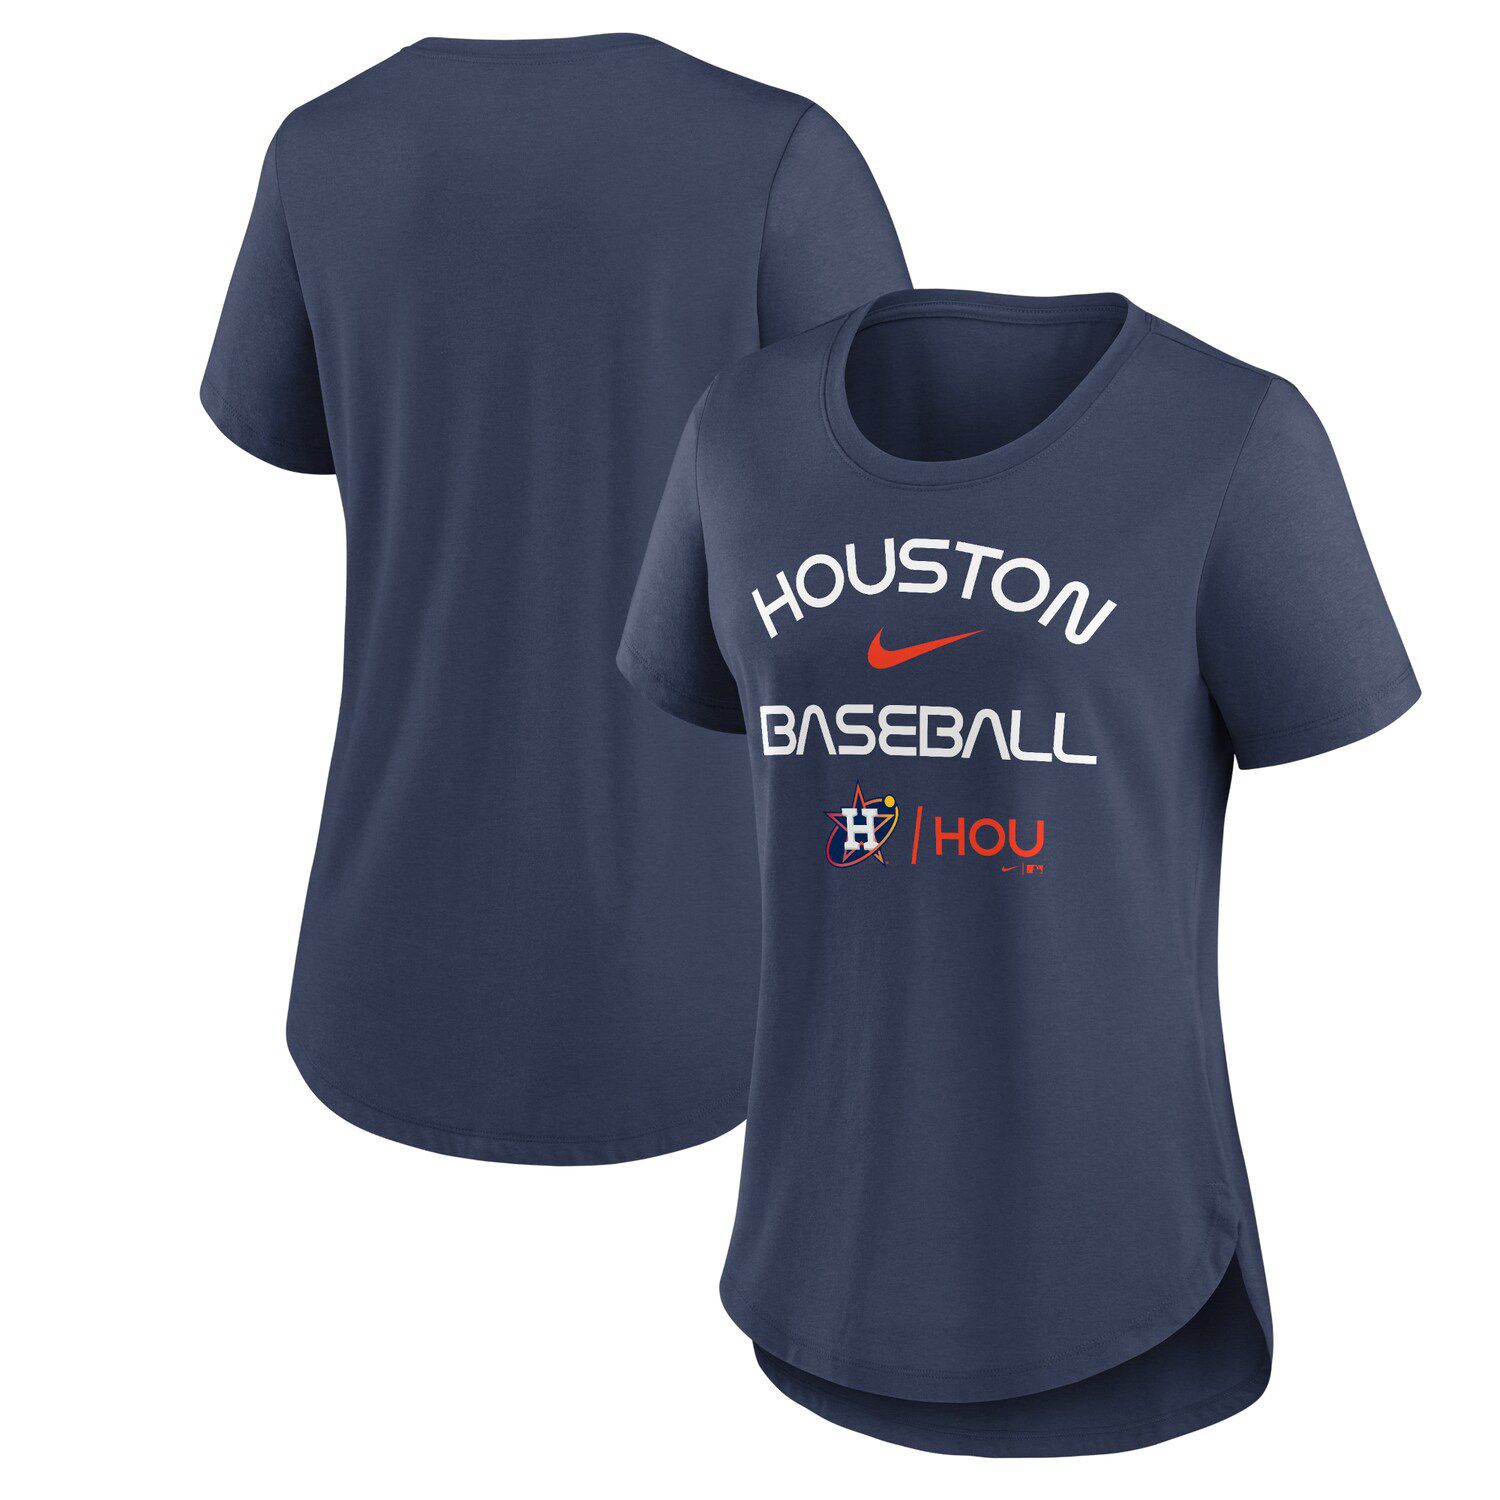 Youth Houston Astros Alex Bregman Nike Orange Player Name & Number T-Shirt